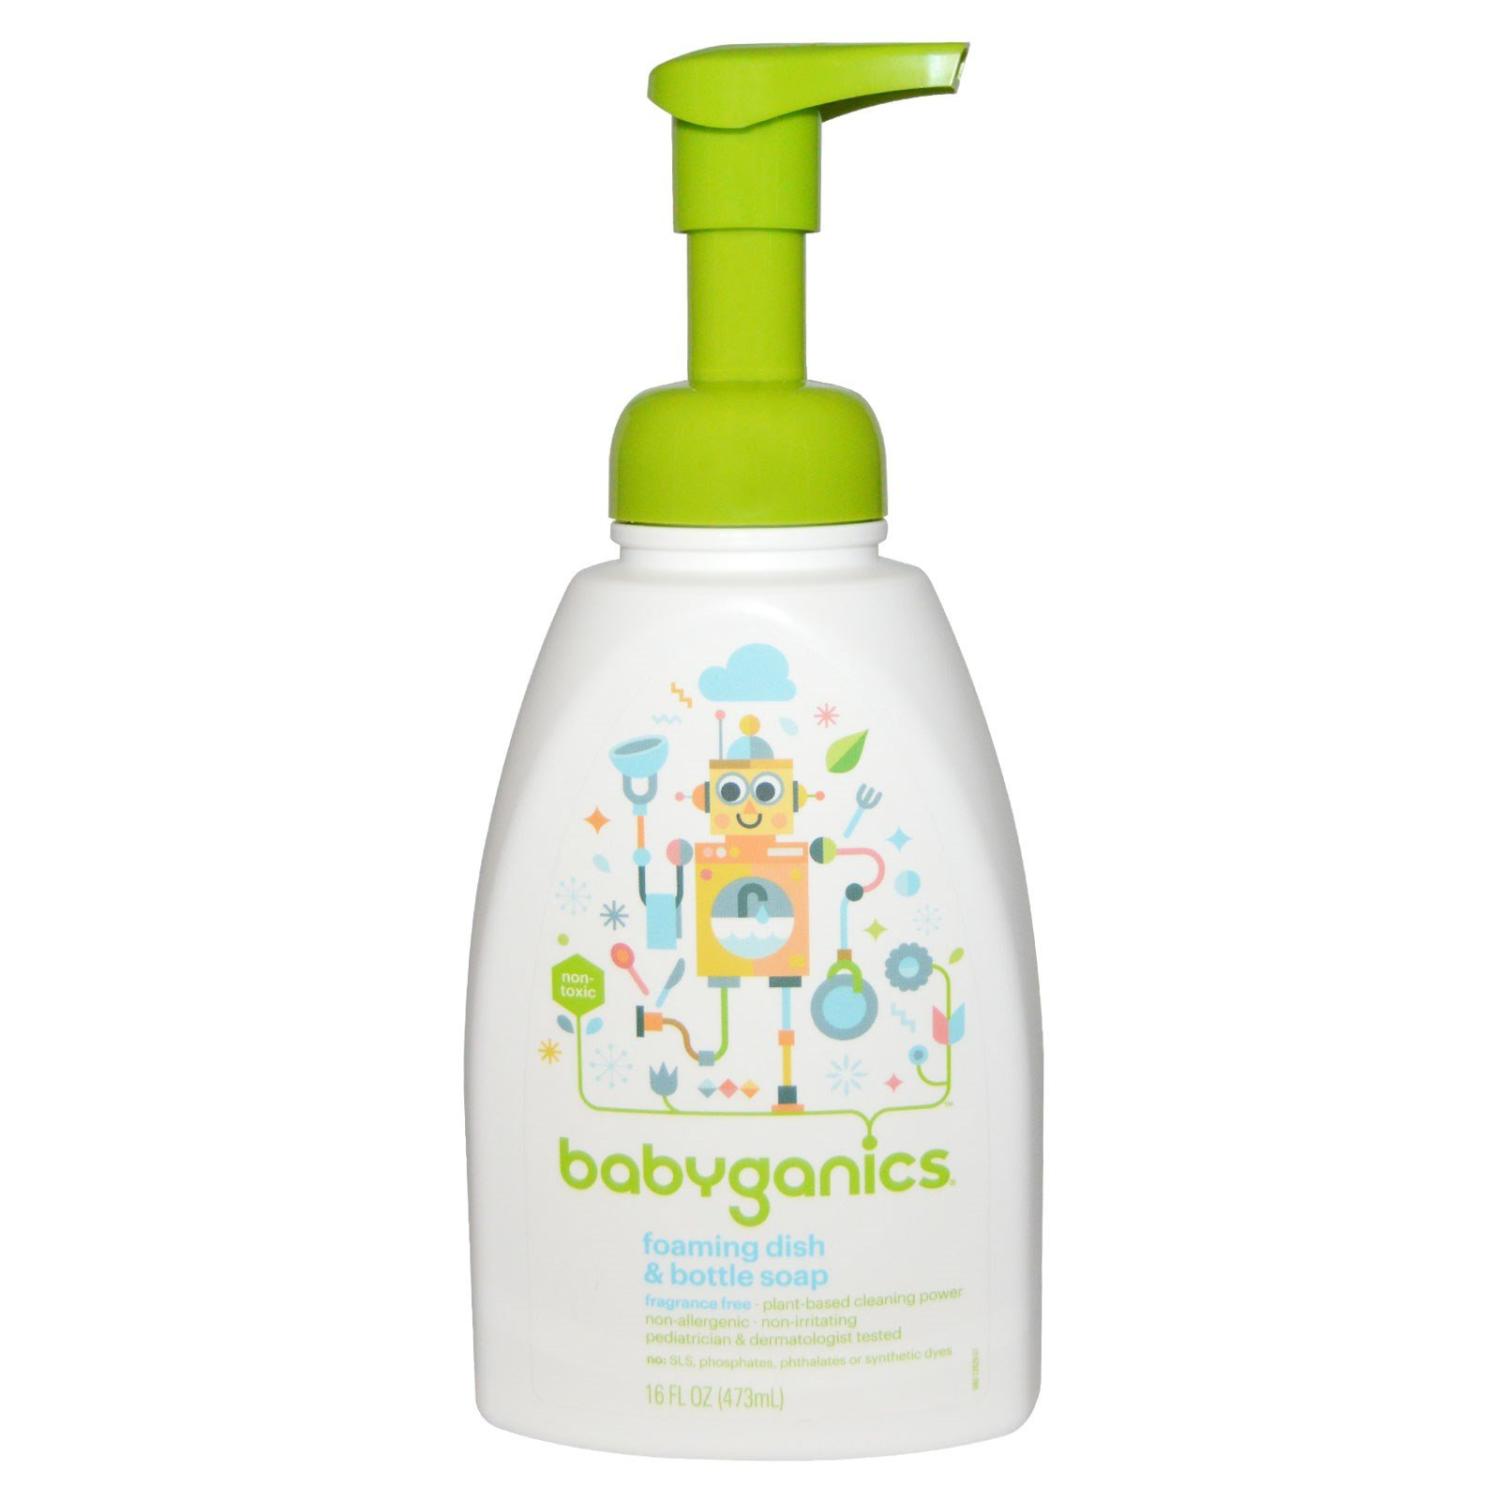 Babyganics Fragrance Free Foaming Dish and Bottle Soap, 16 fl oz